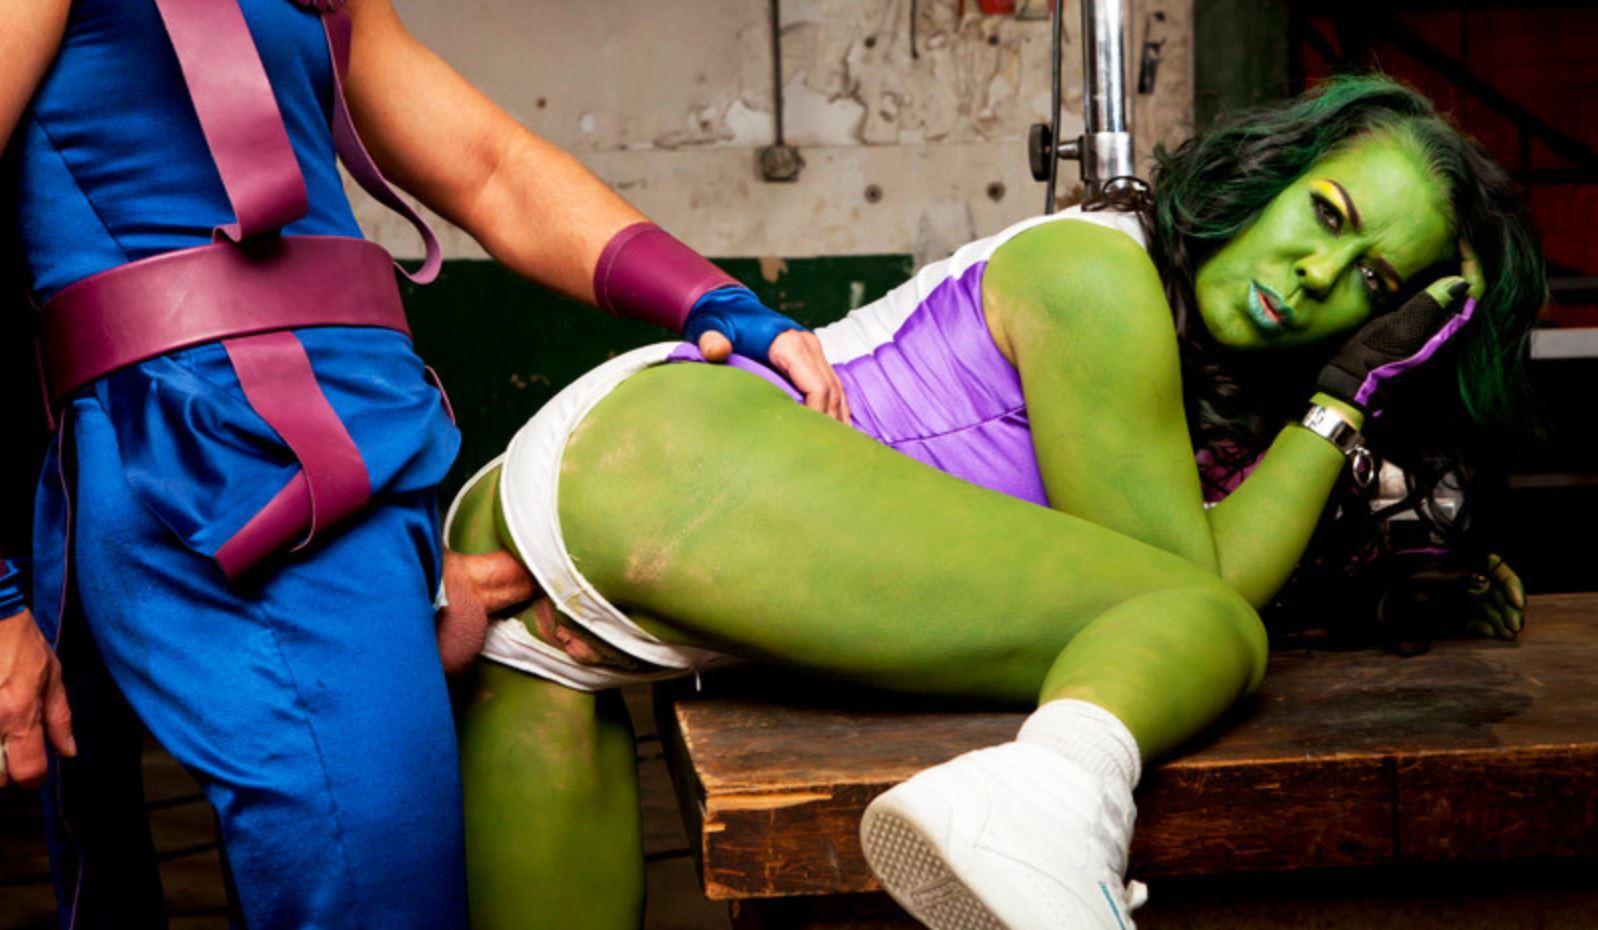 She hulk cosplay porn